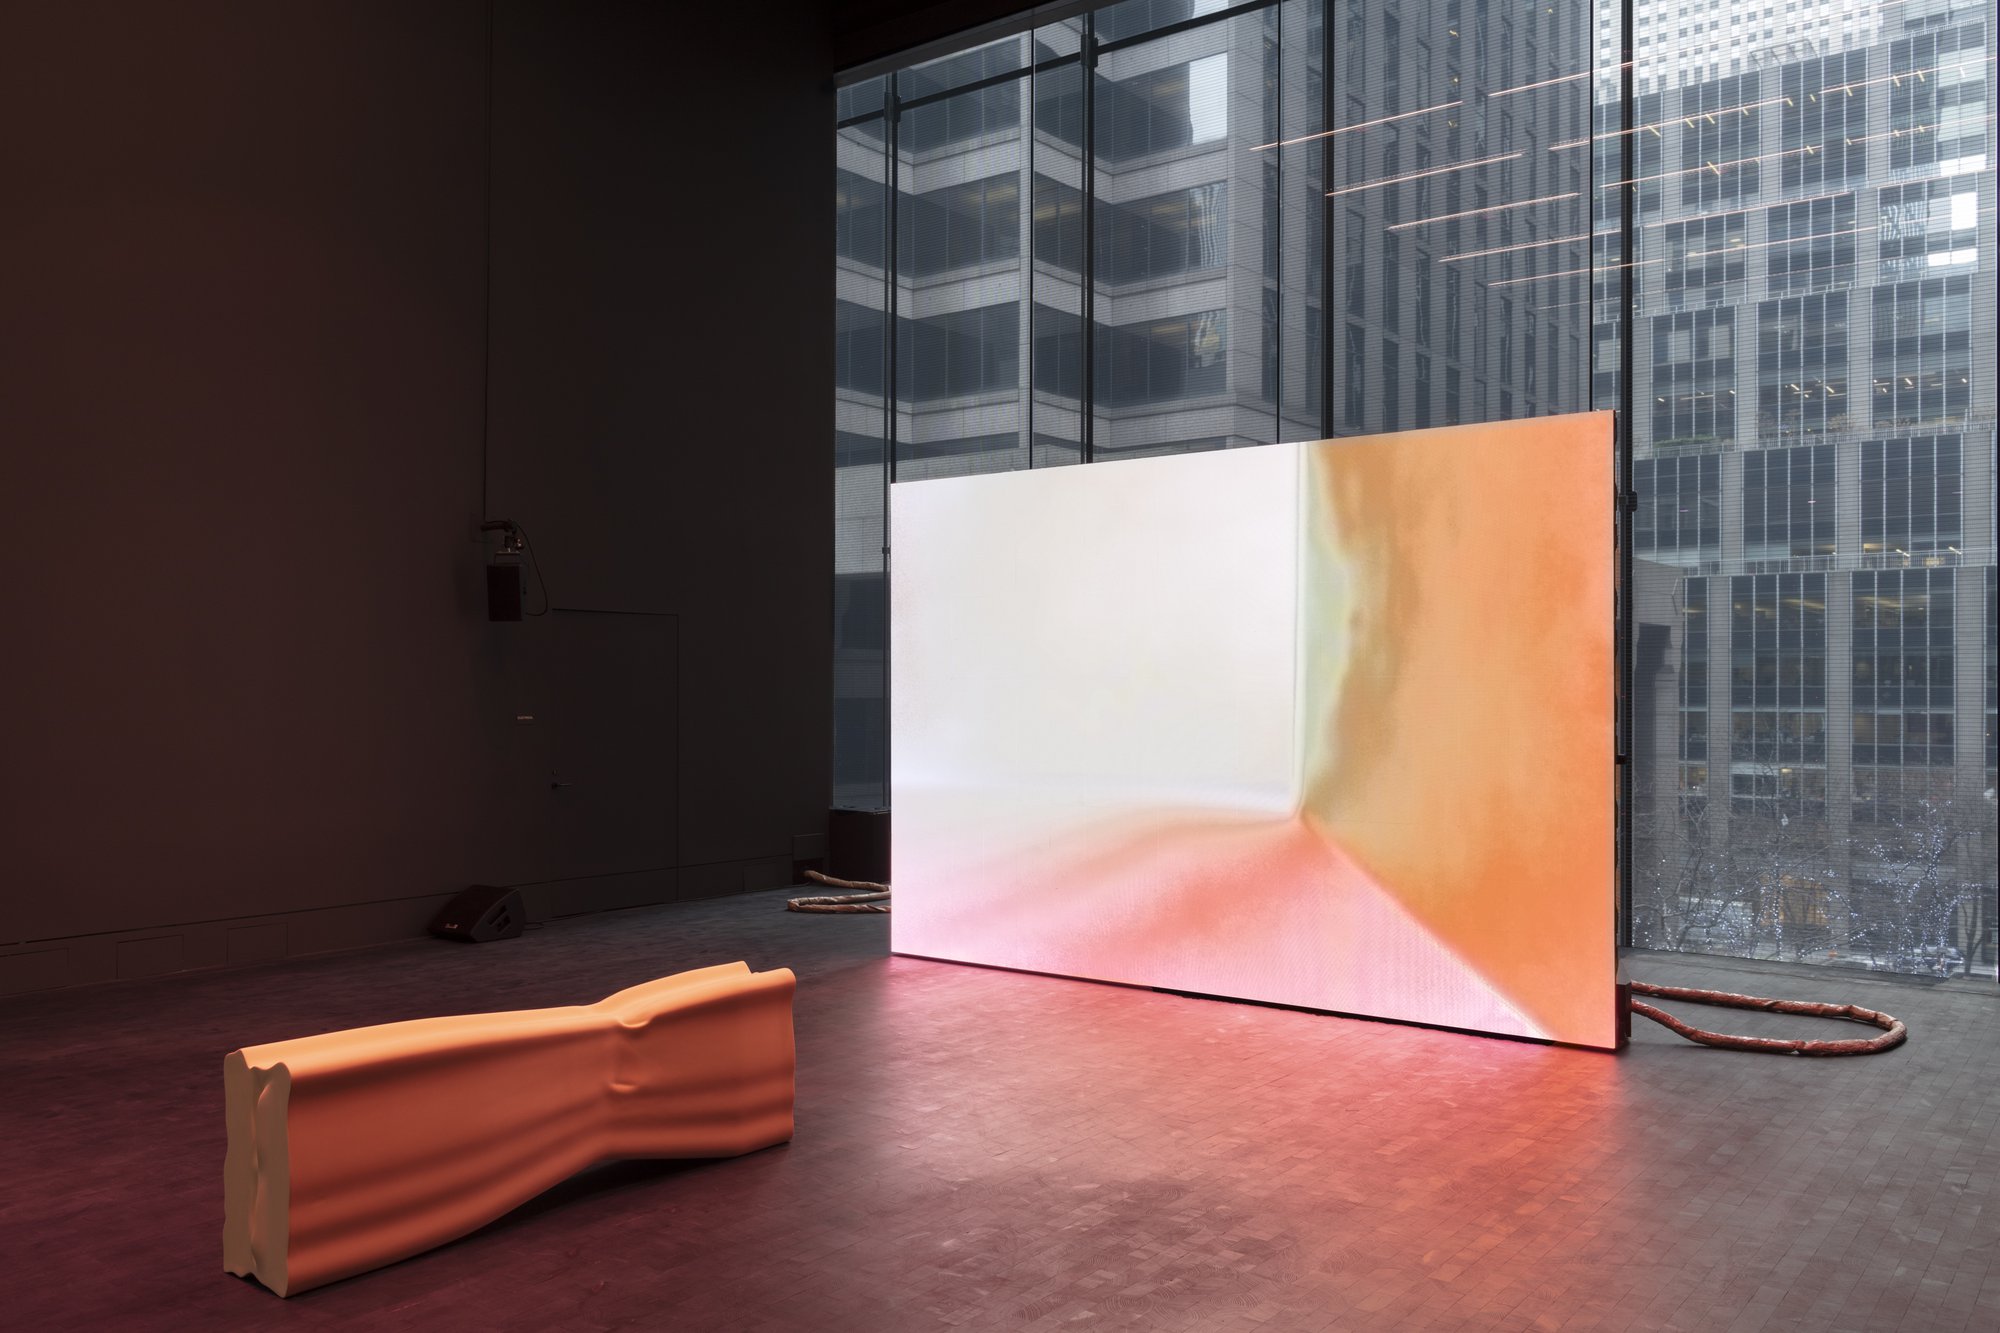 Shahryar Nashat, Installation view, Force Life, MoMA, New York, 2020